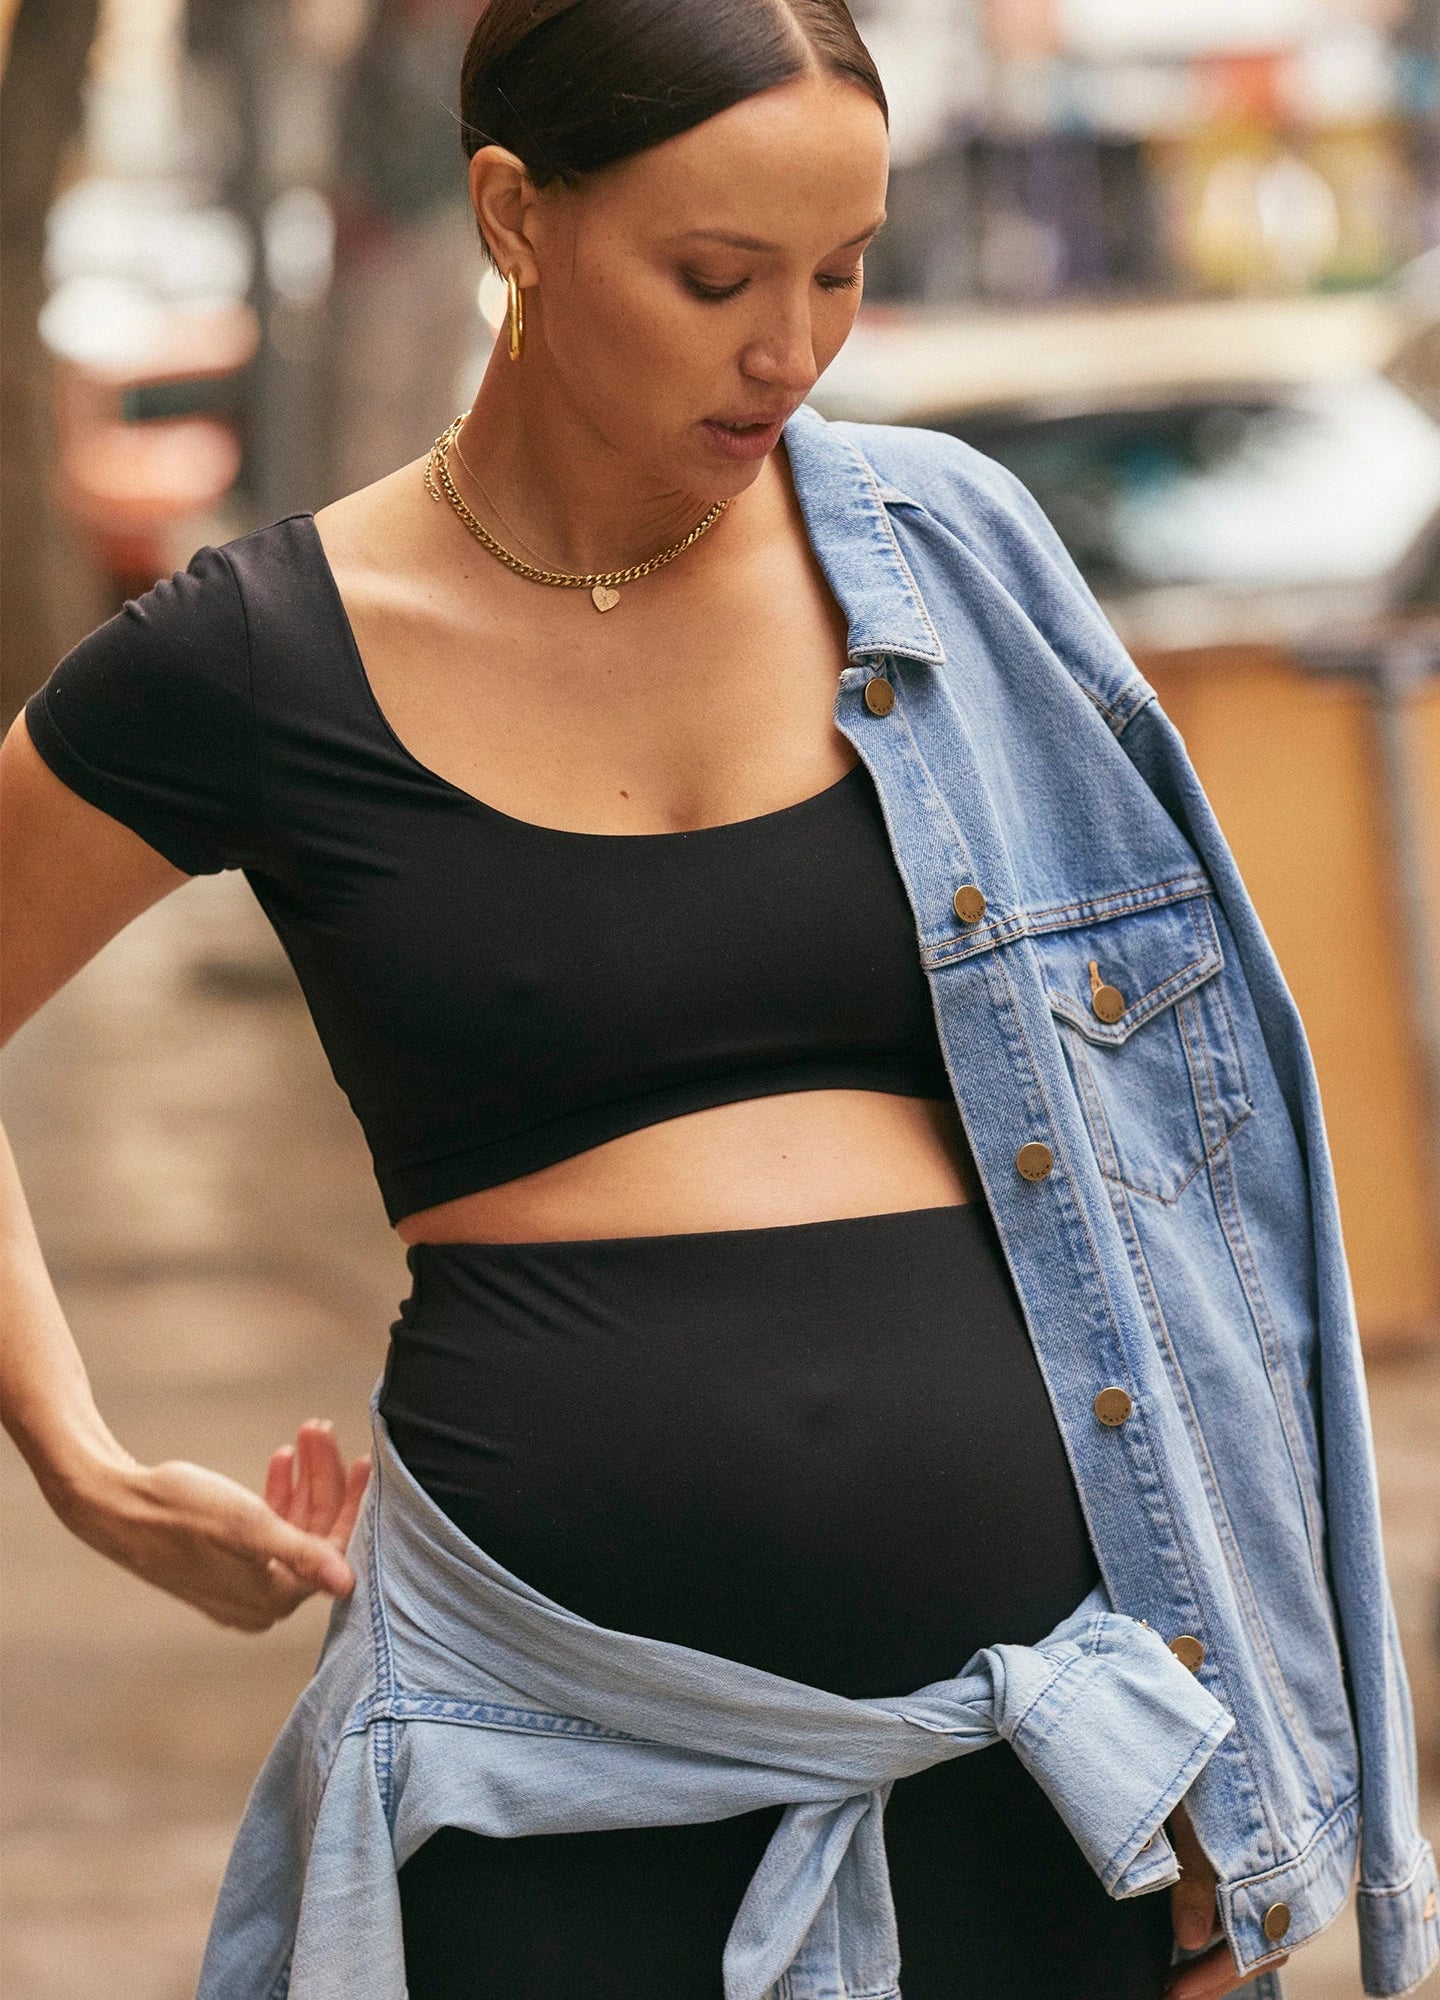 Rihanna Wearing Hatch Maternity Bra, 2022